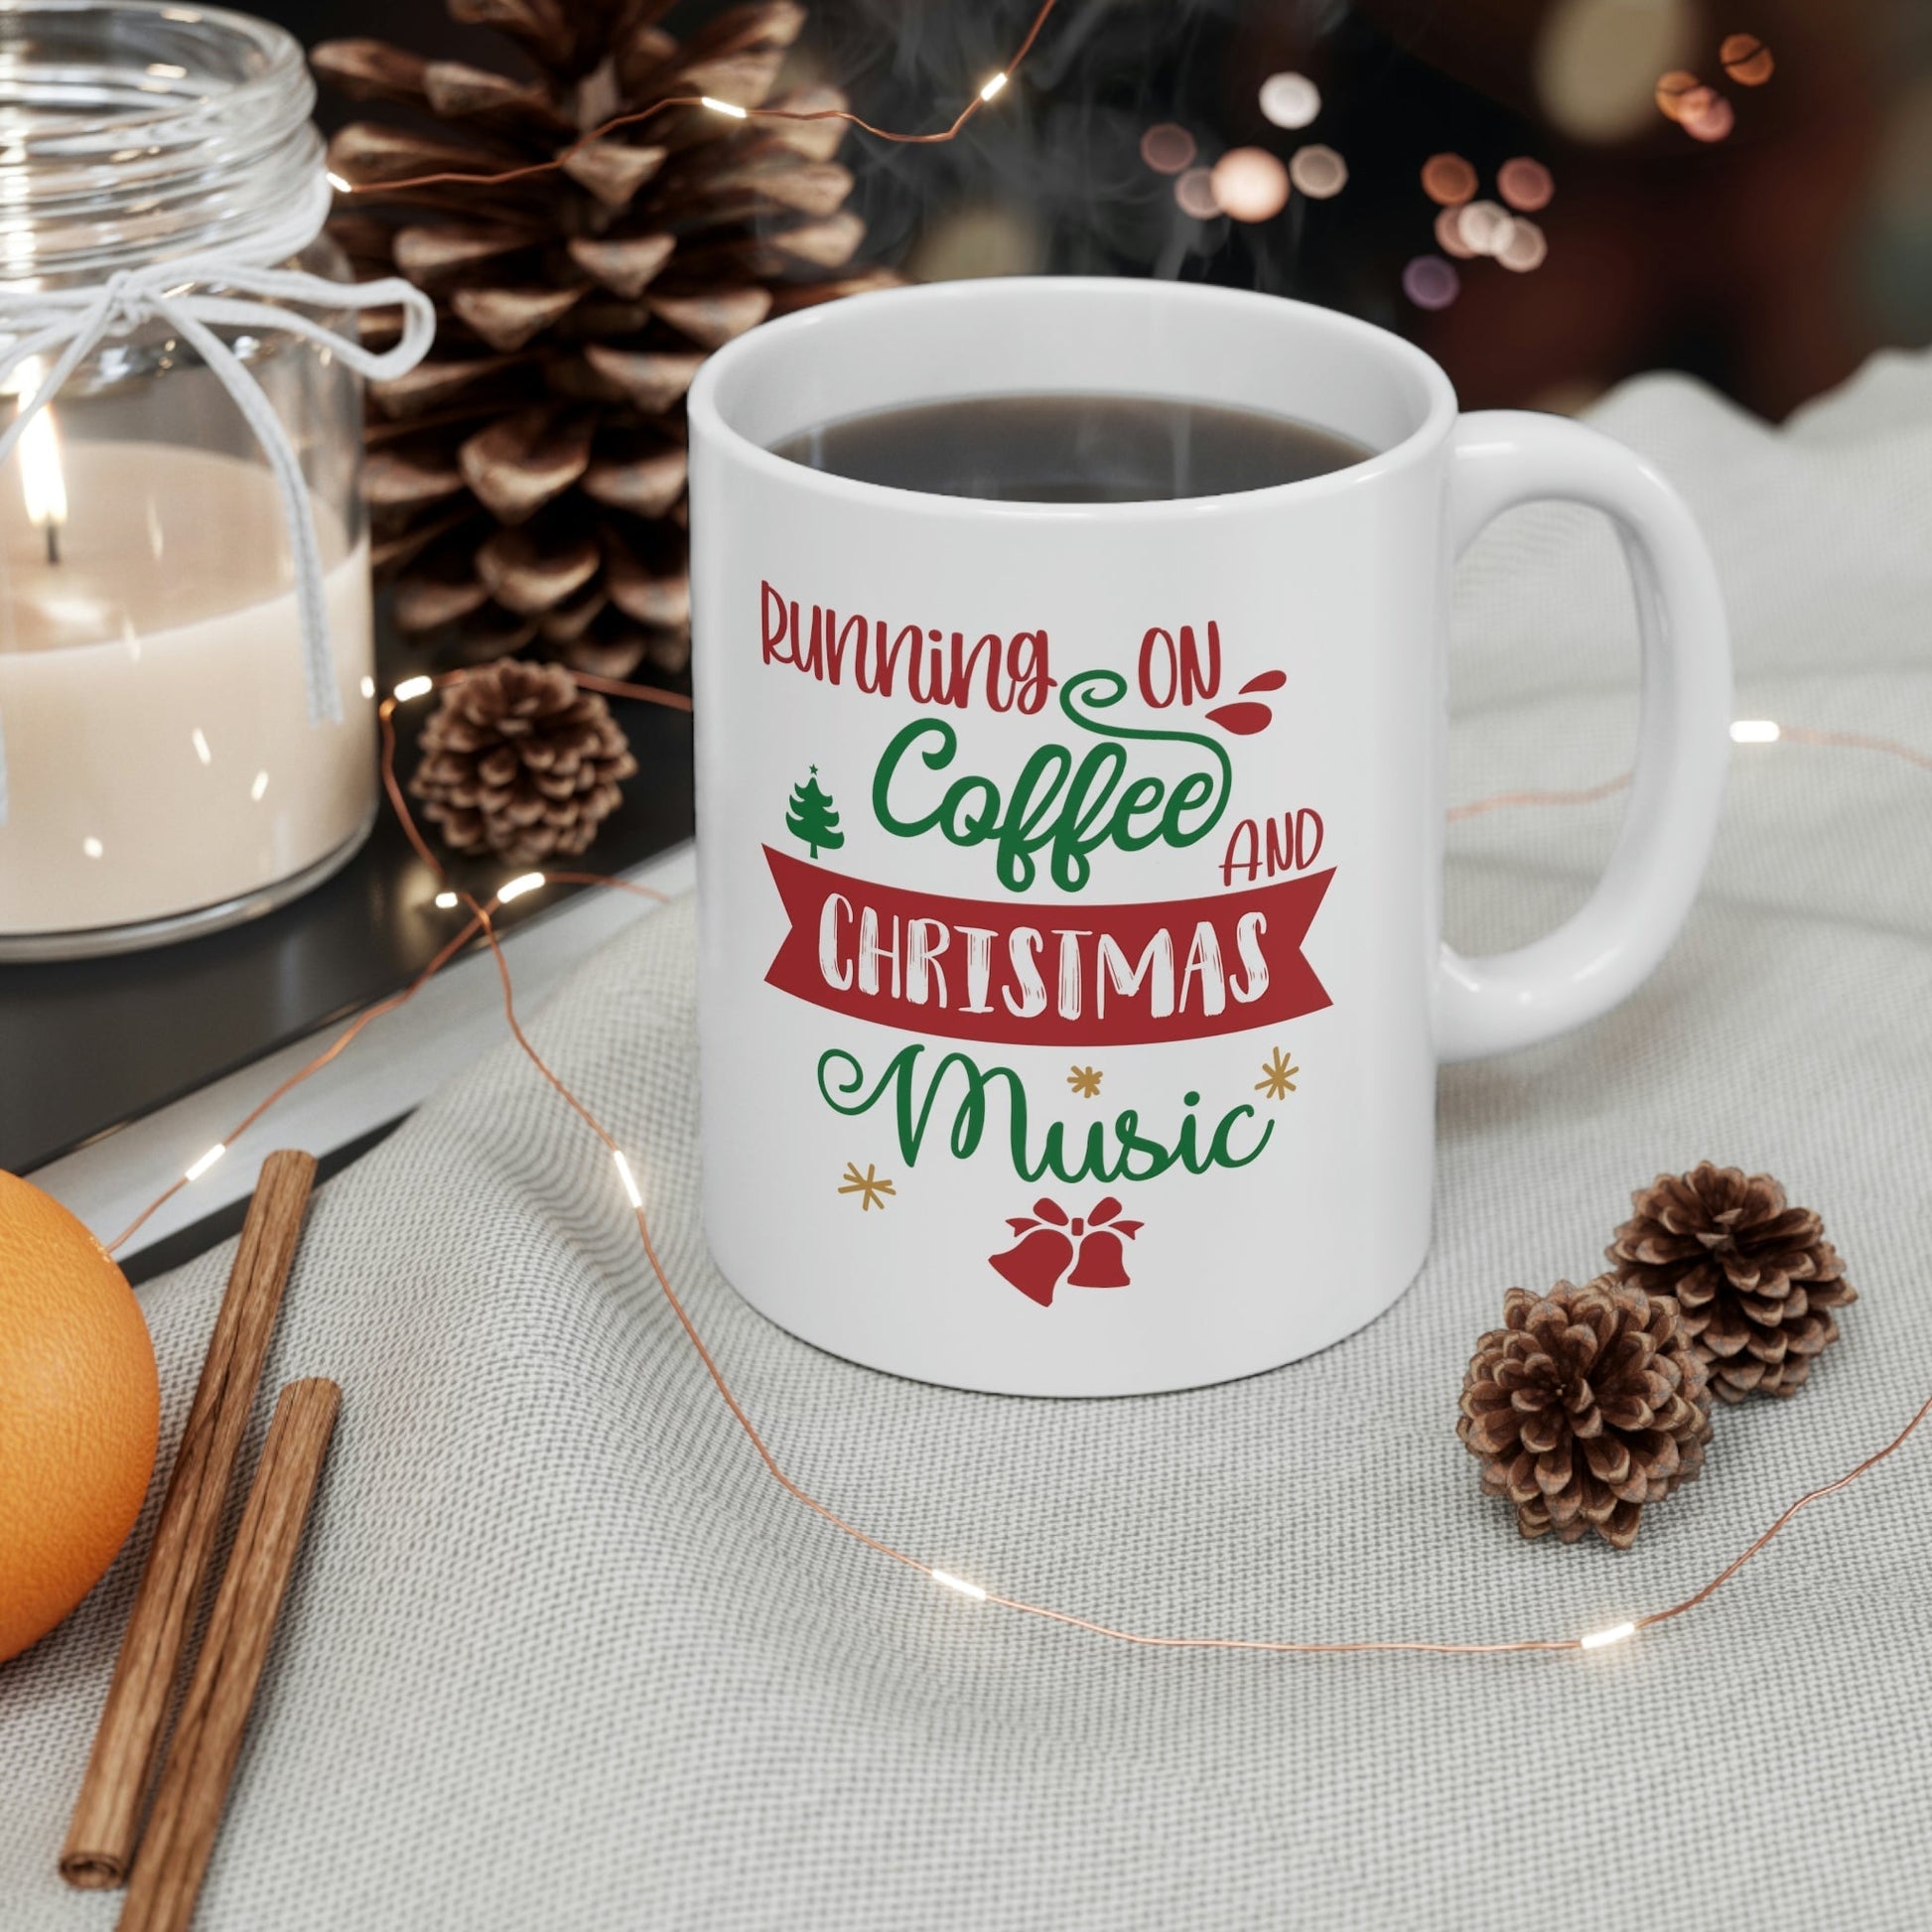 Running On Coffee And Christmas Quotes Music Wishes Ceramic Mug 11oz Ichaku [Perfect Gifts Selection]